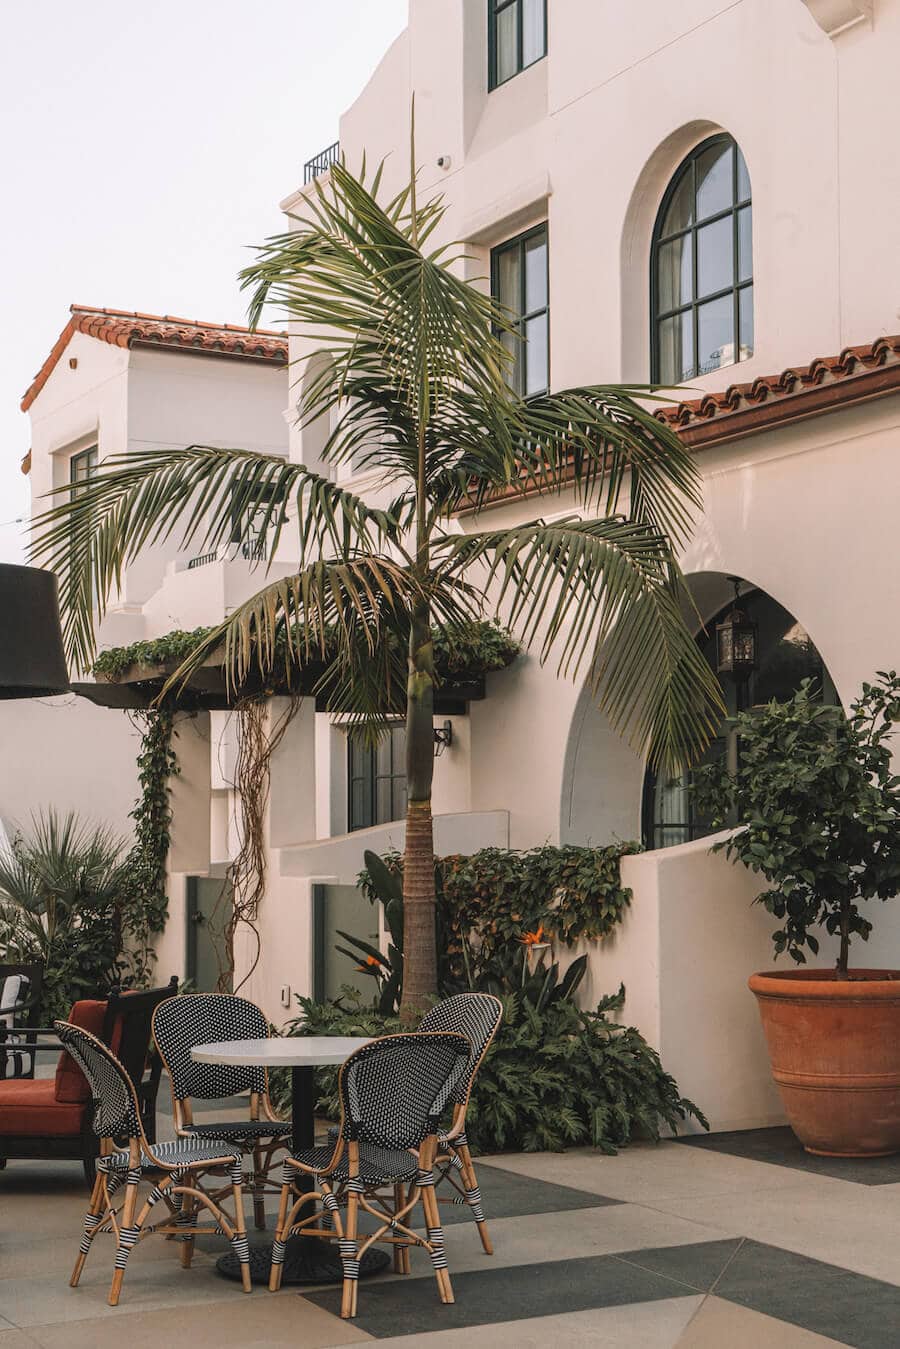 Hotel Californian en Santa Bárbara, California